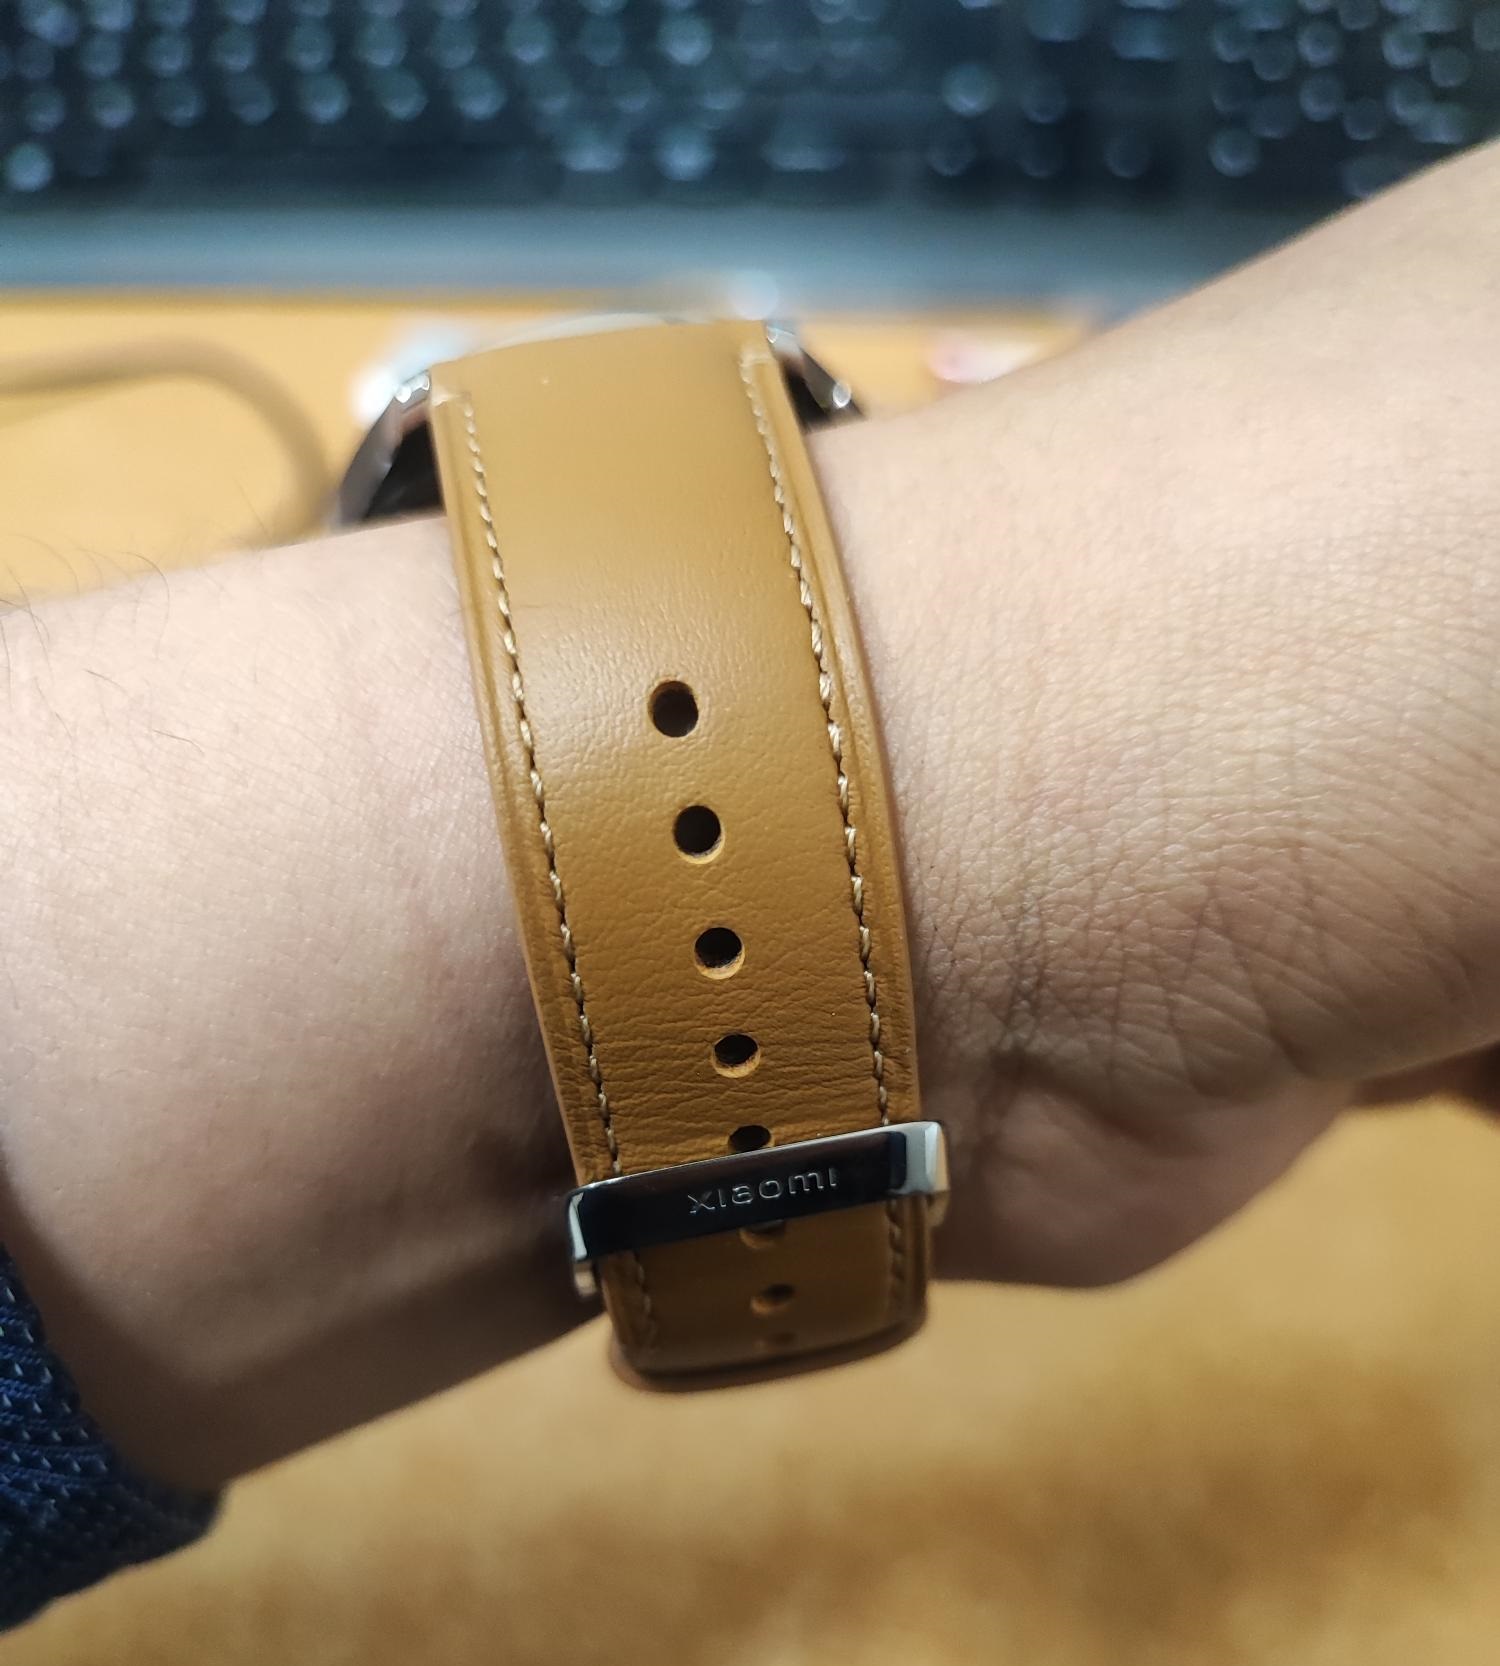 Reloj Inteligente Xiaomi Watch S1 Black_Xiaomi Store